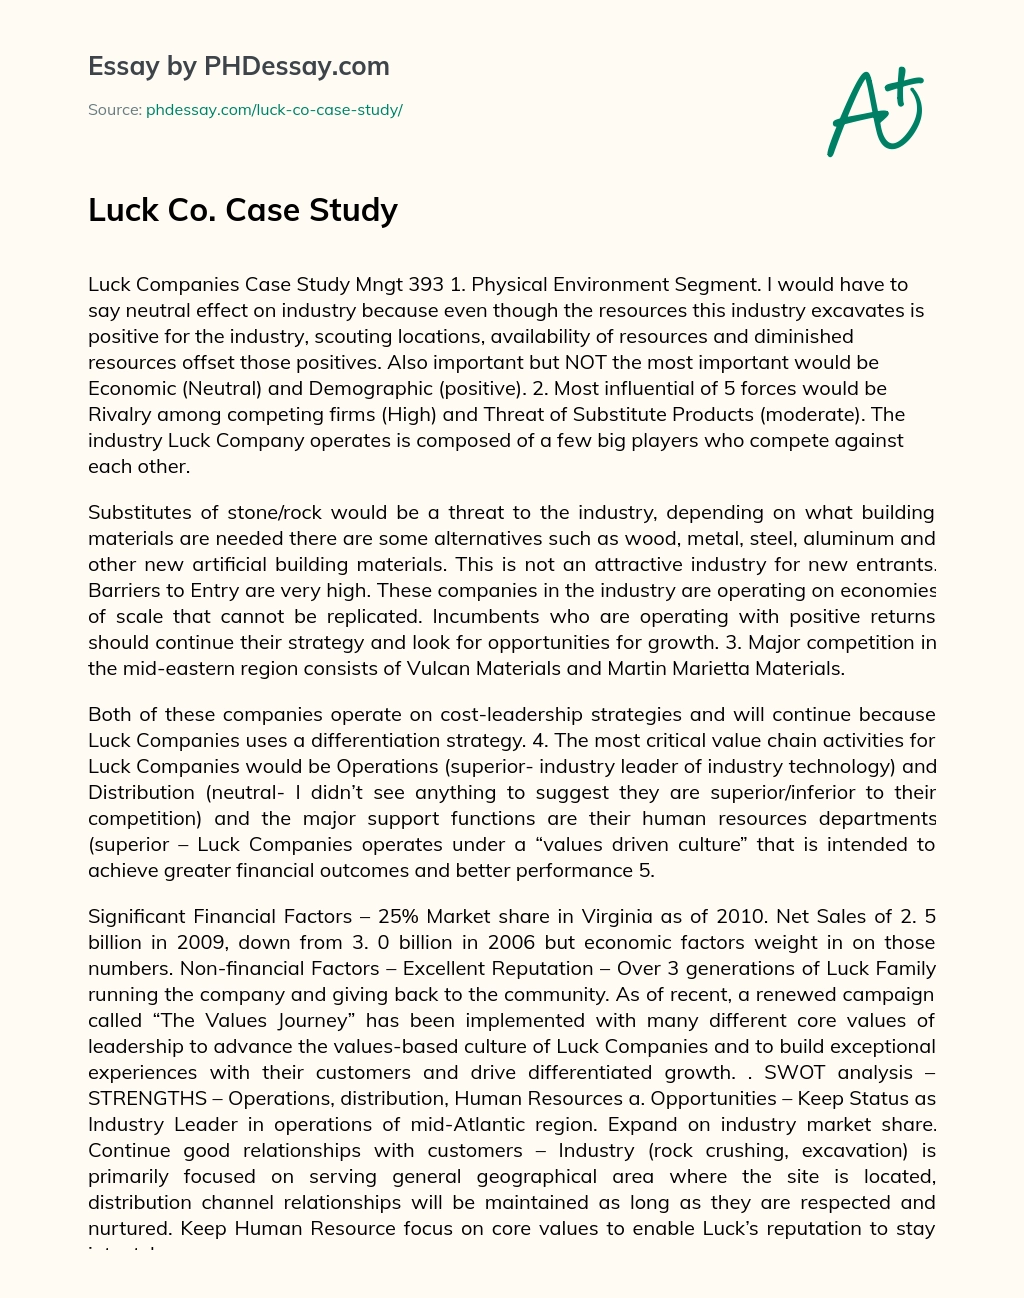 Luck Co. Case Study essay